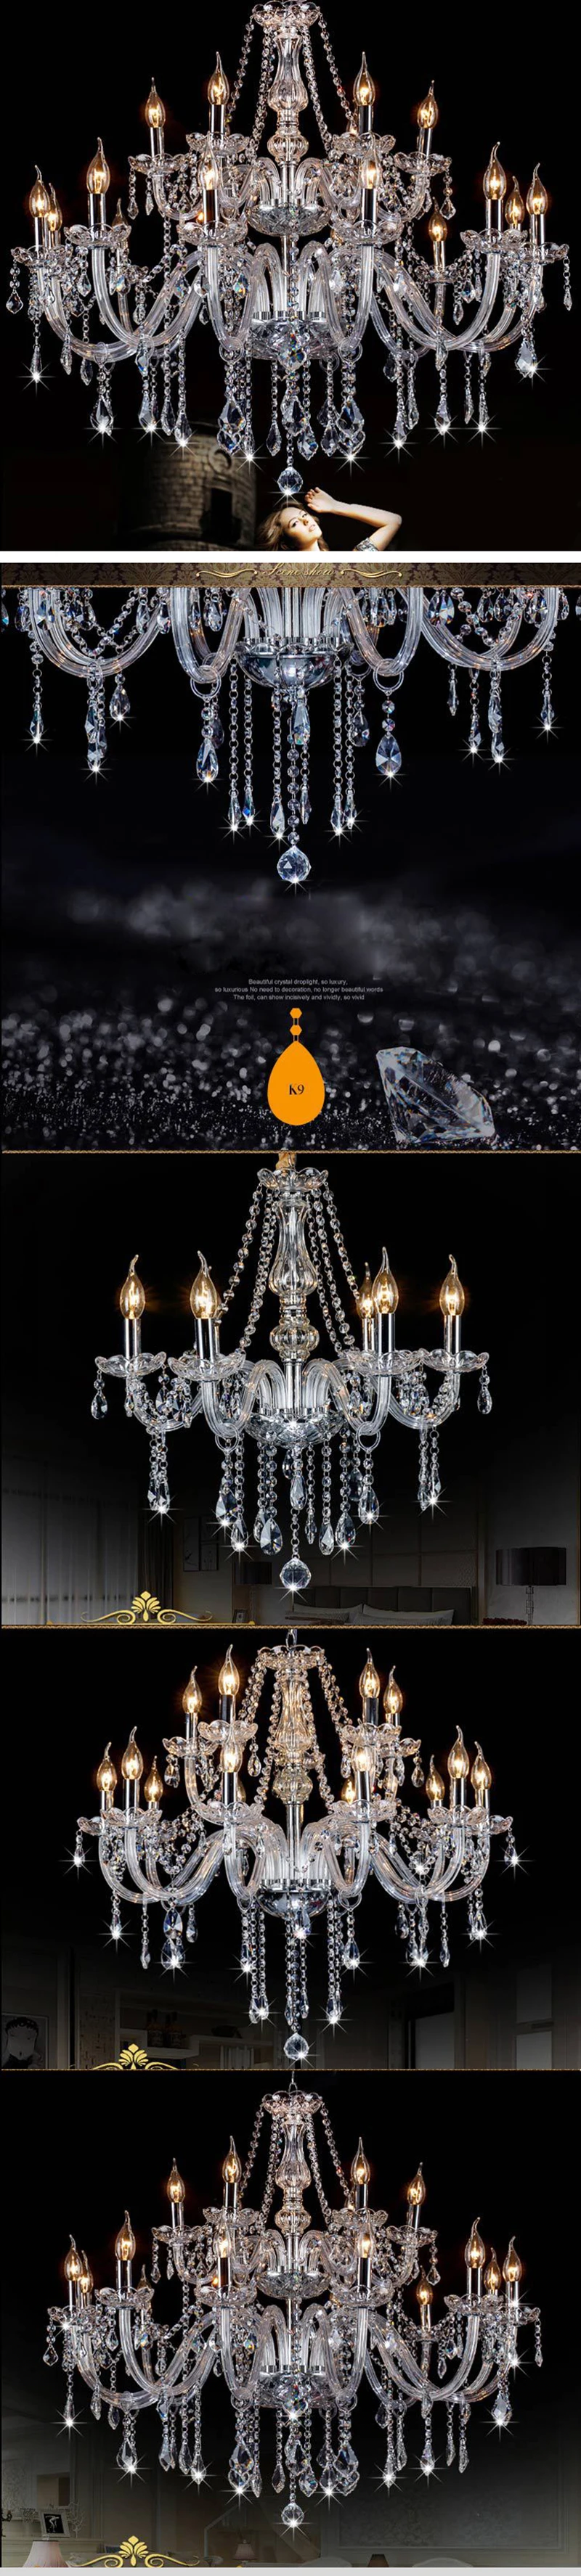 zhongshan lighting factory candle lamp living room light decoration pendant lights crystal chandelier